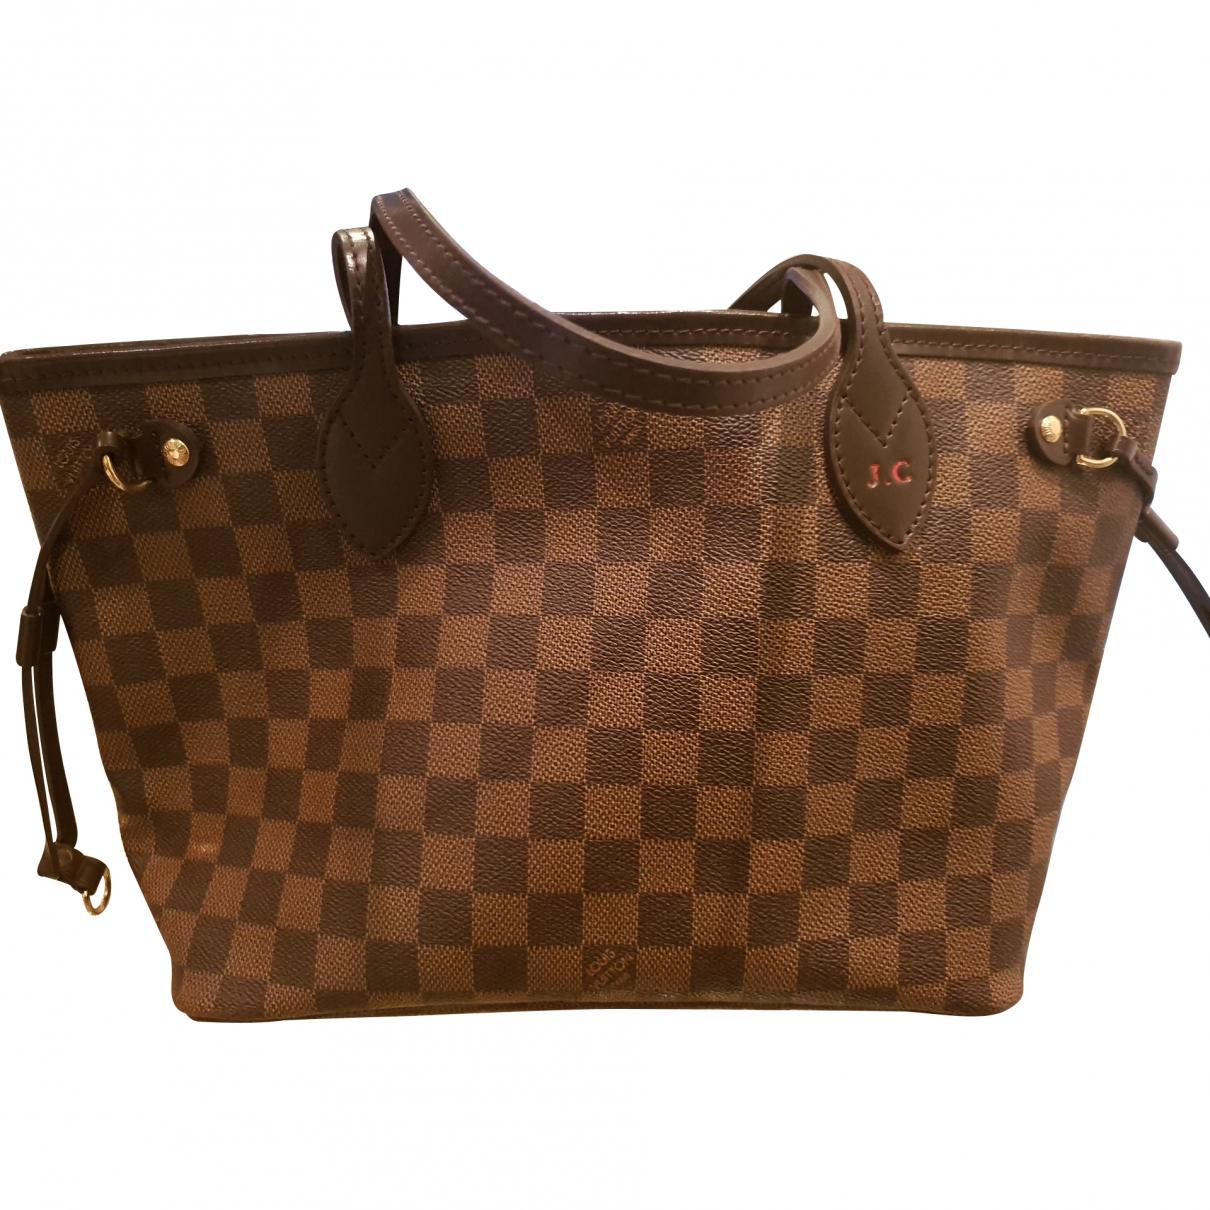 Lyst - Louis Vuitton Neverfull Brown Cloth Handbag in Brown